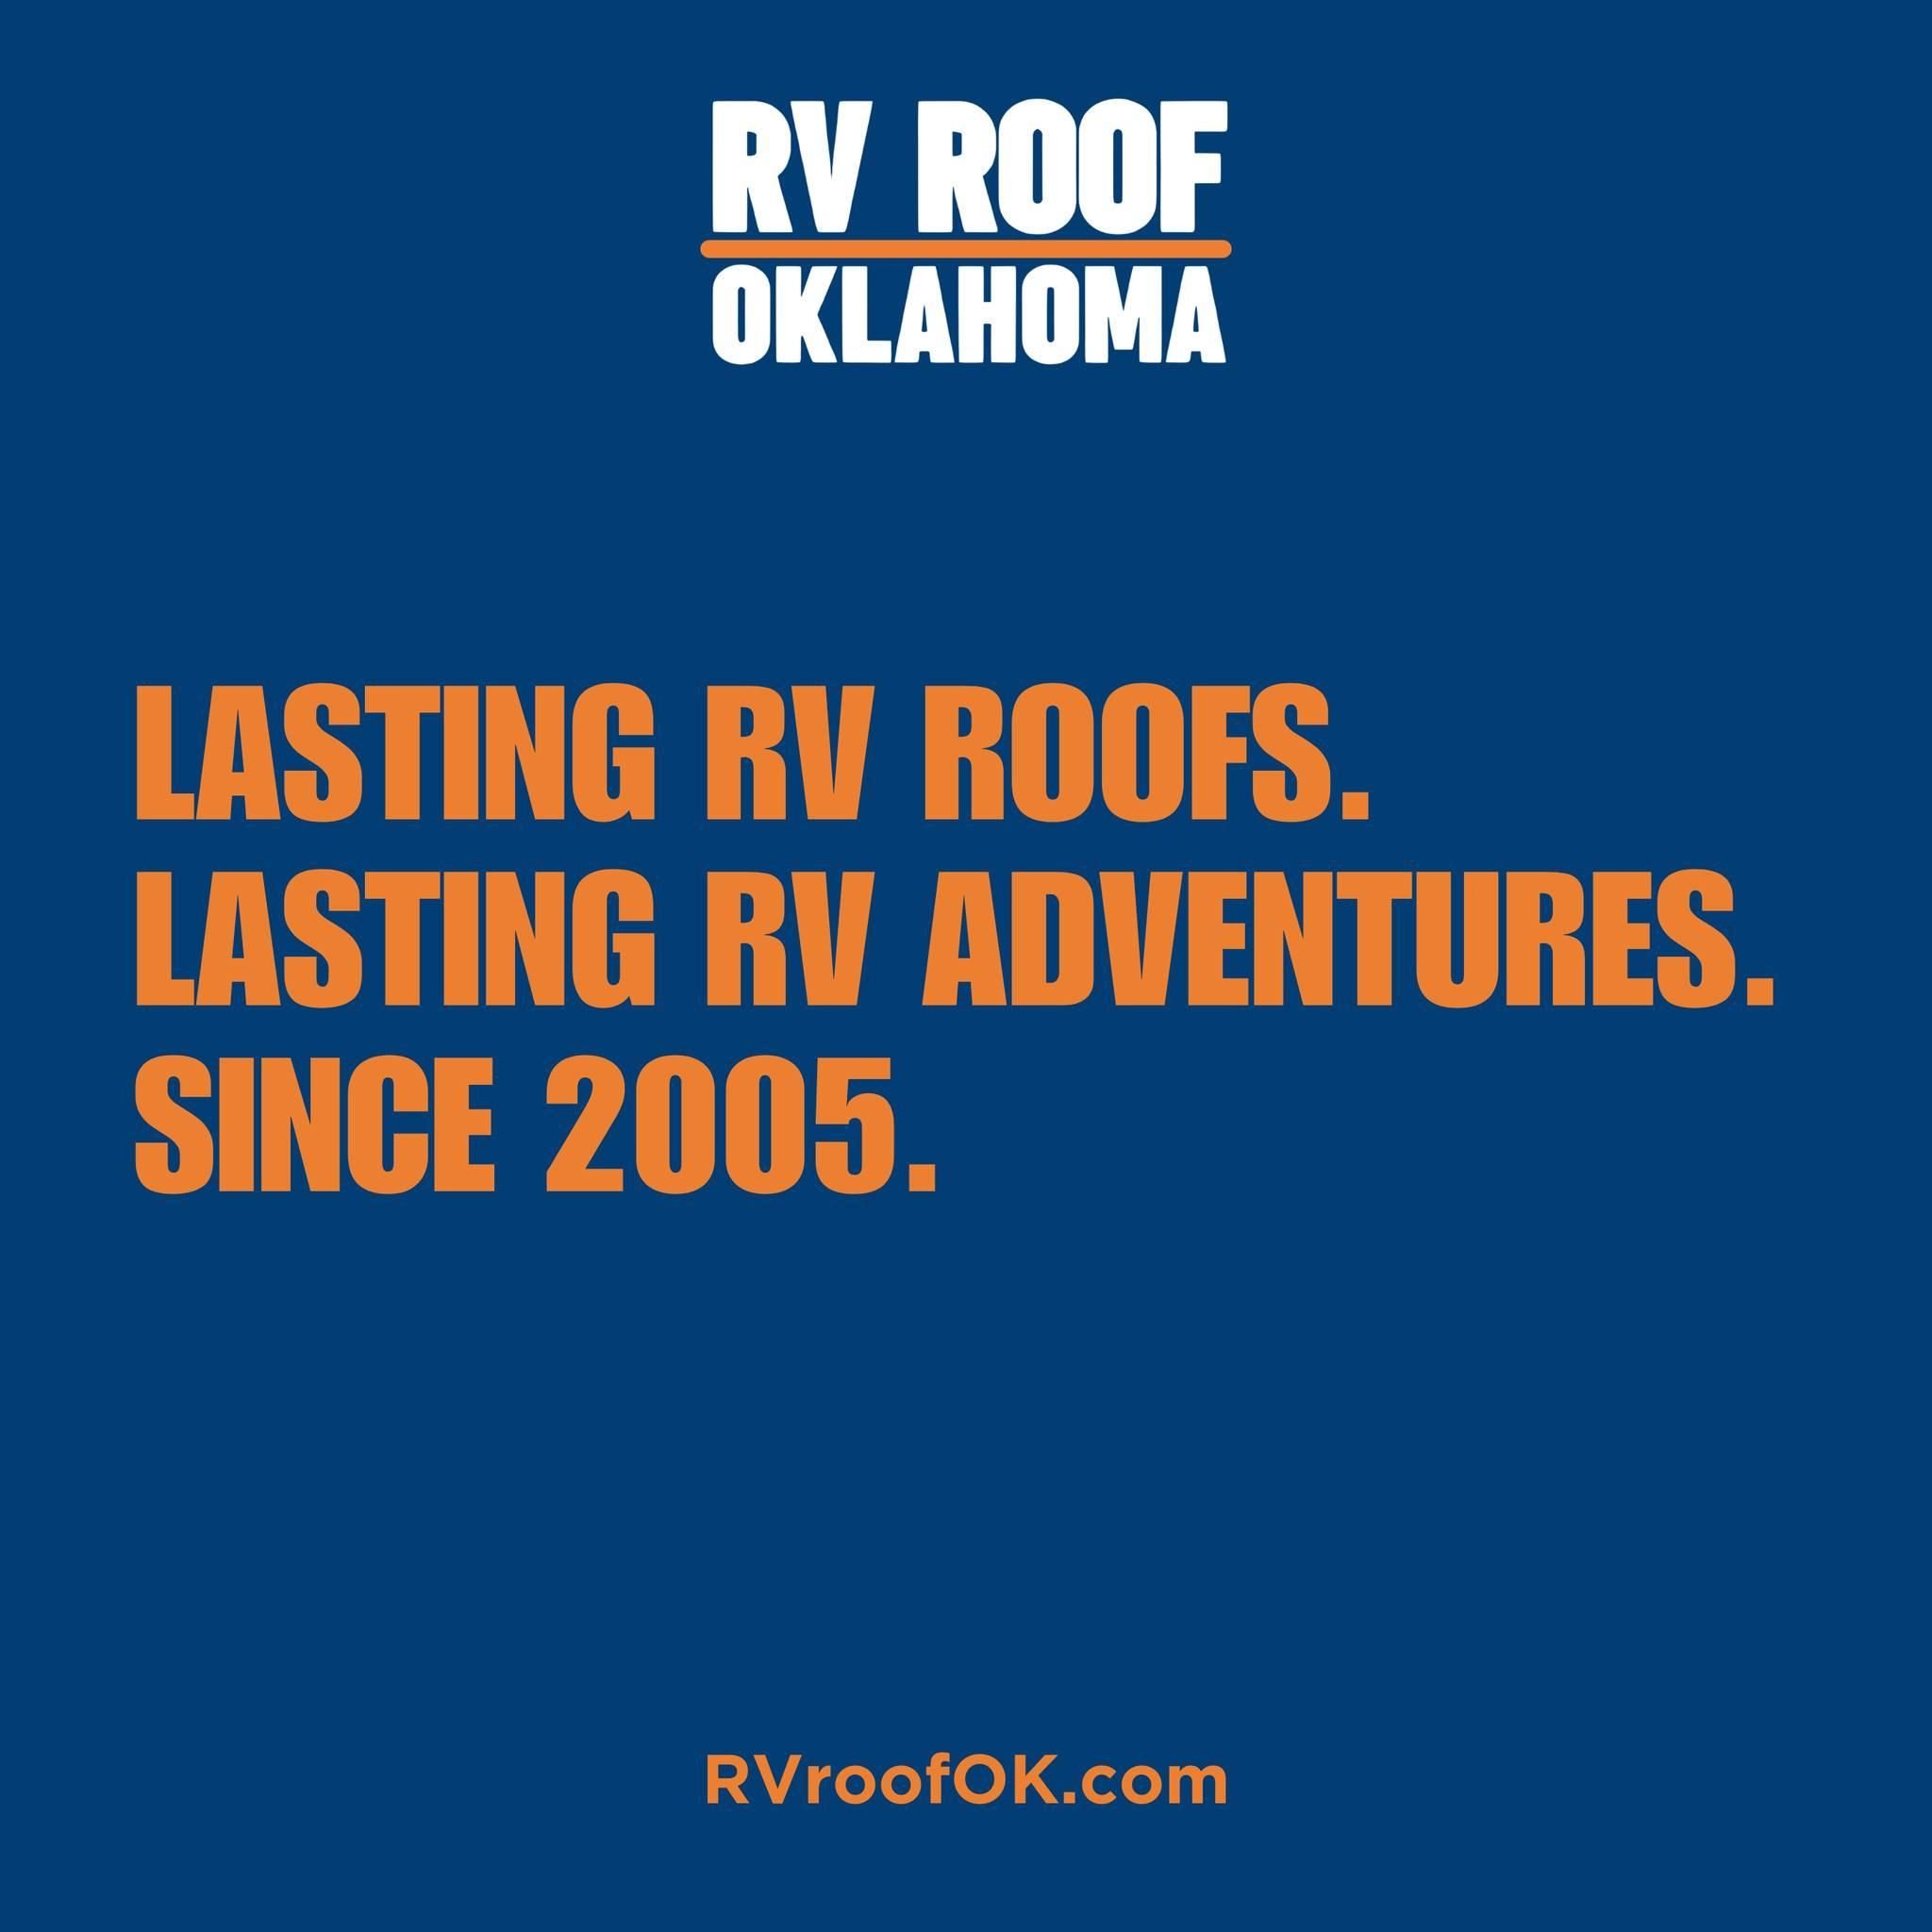 All Photos for RV Roof Oklahoma in Oklahoma City, OK